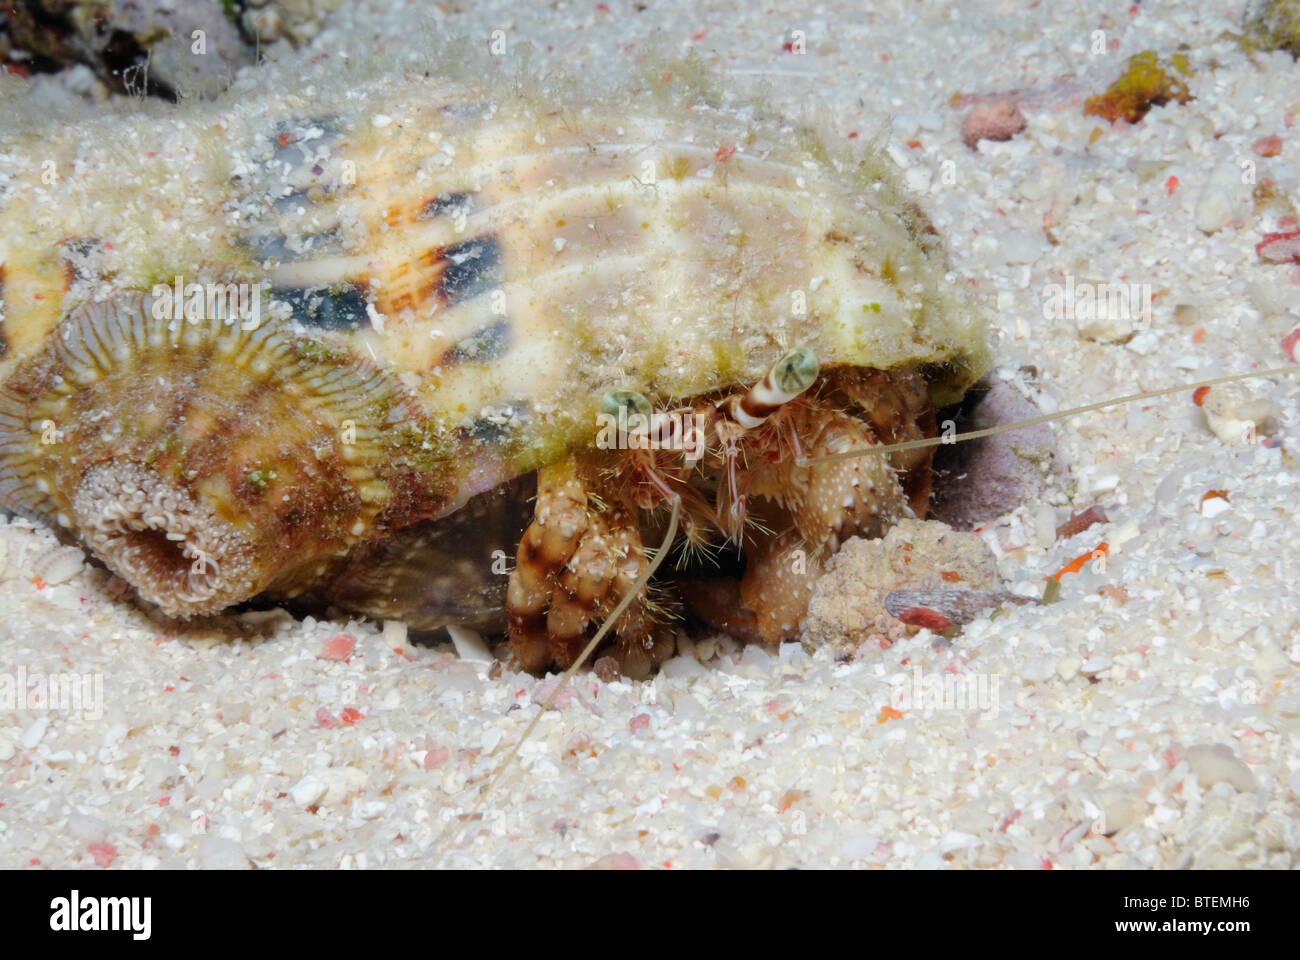 Anemone hermit crab, off Safaga coast, Egypt, Red Sea Stock Photo